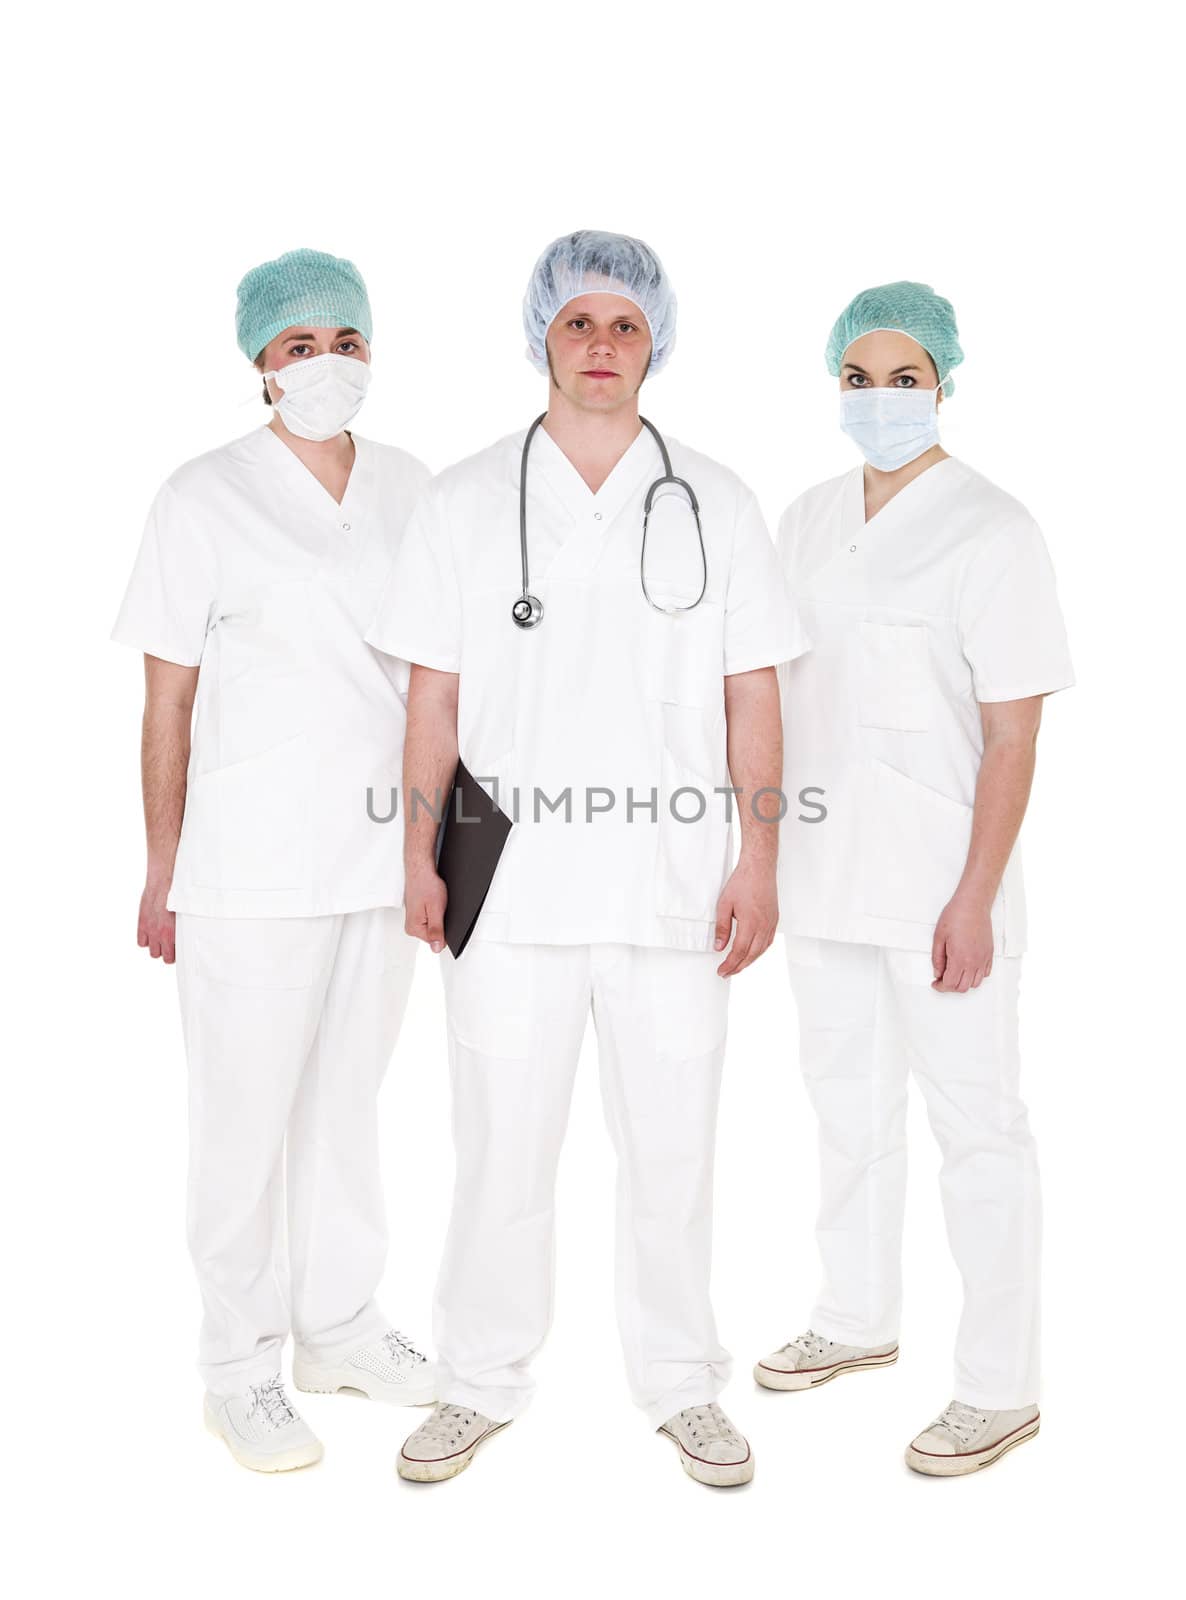 Doctor and Nurses by gemenacom